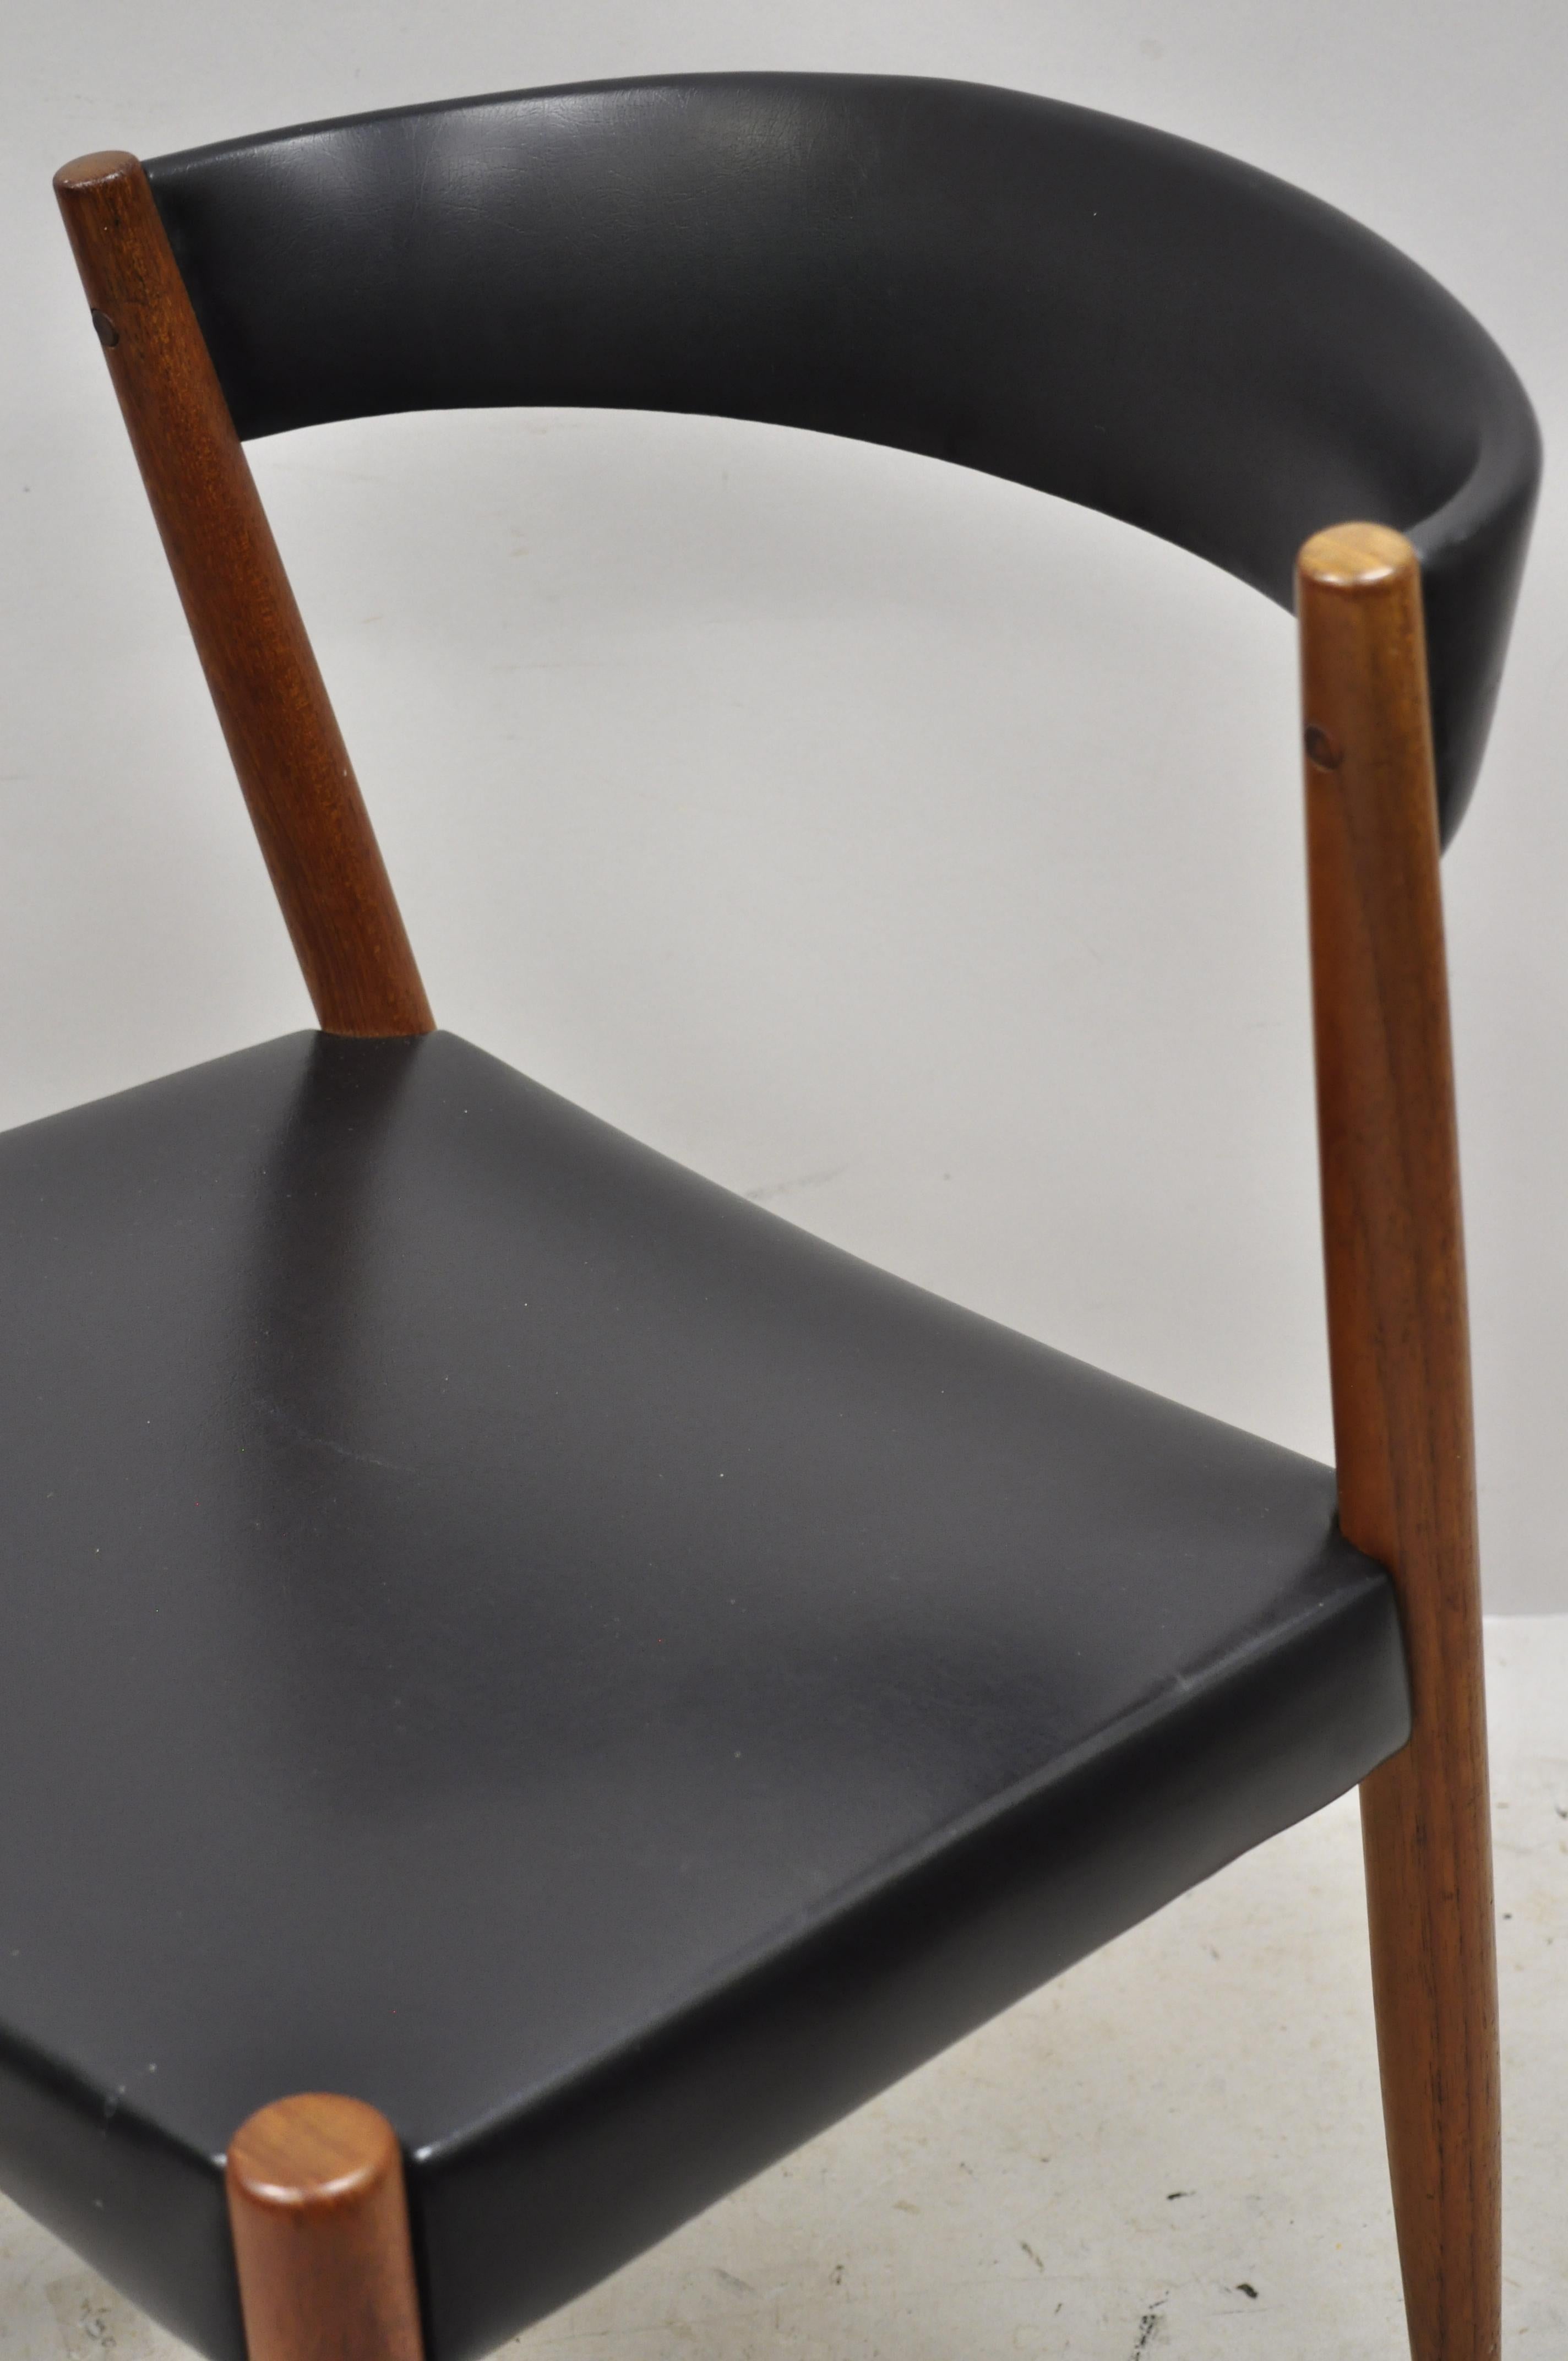 Naugahyde Midcentury Danish Teak Barrel Back Curved Black Vinyl Dining Side Chairs, Pair